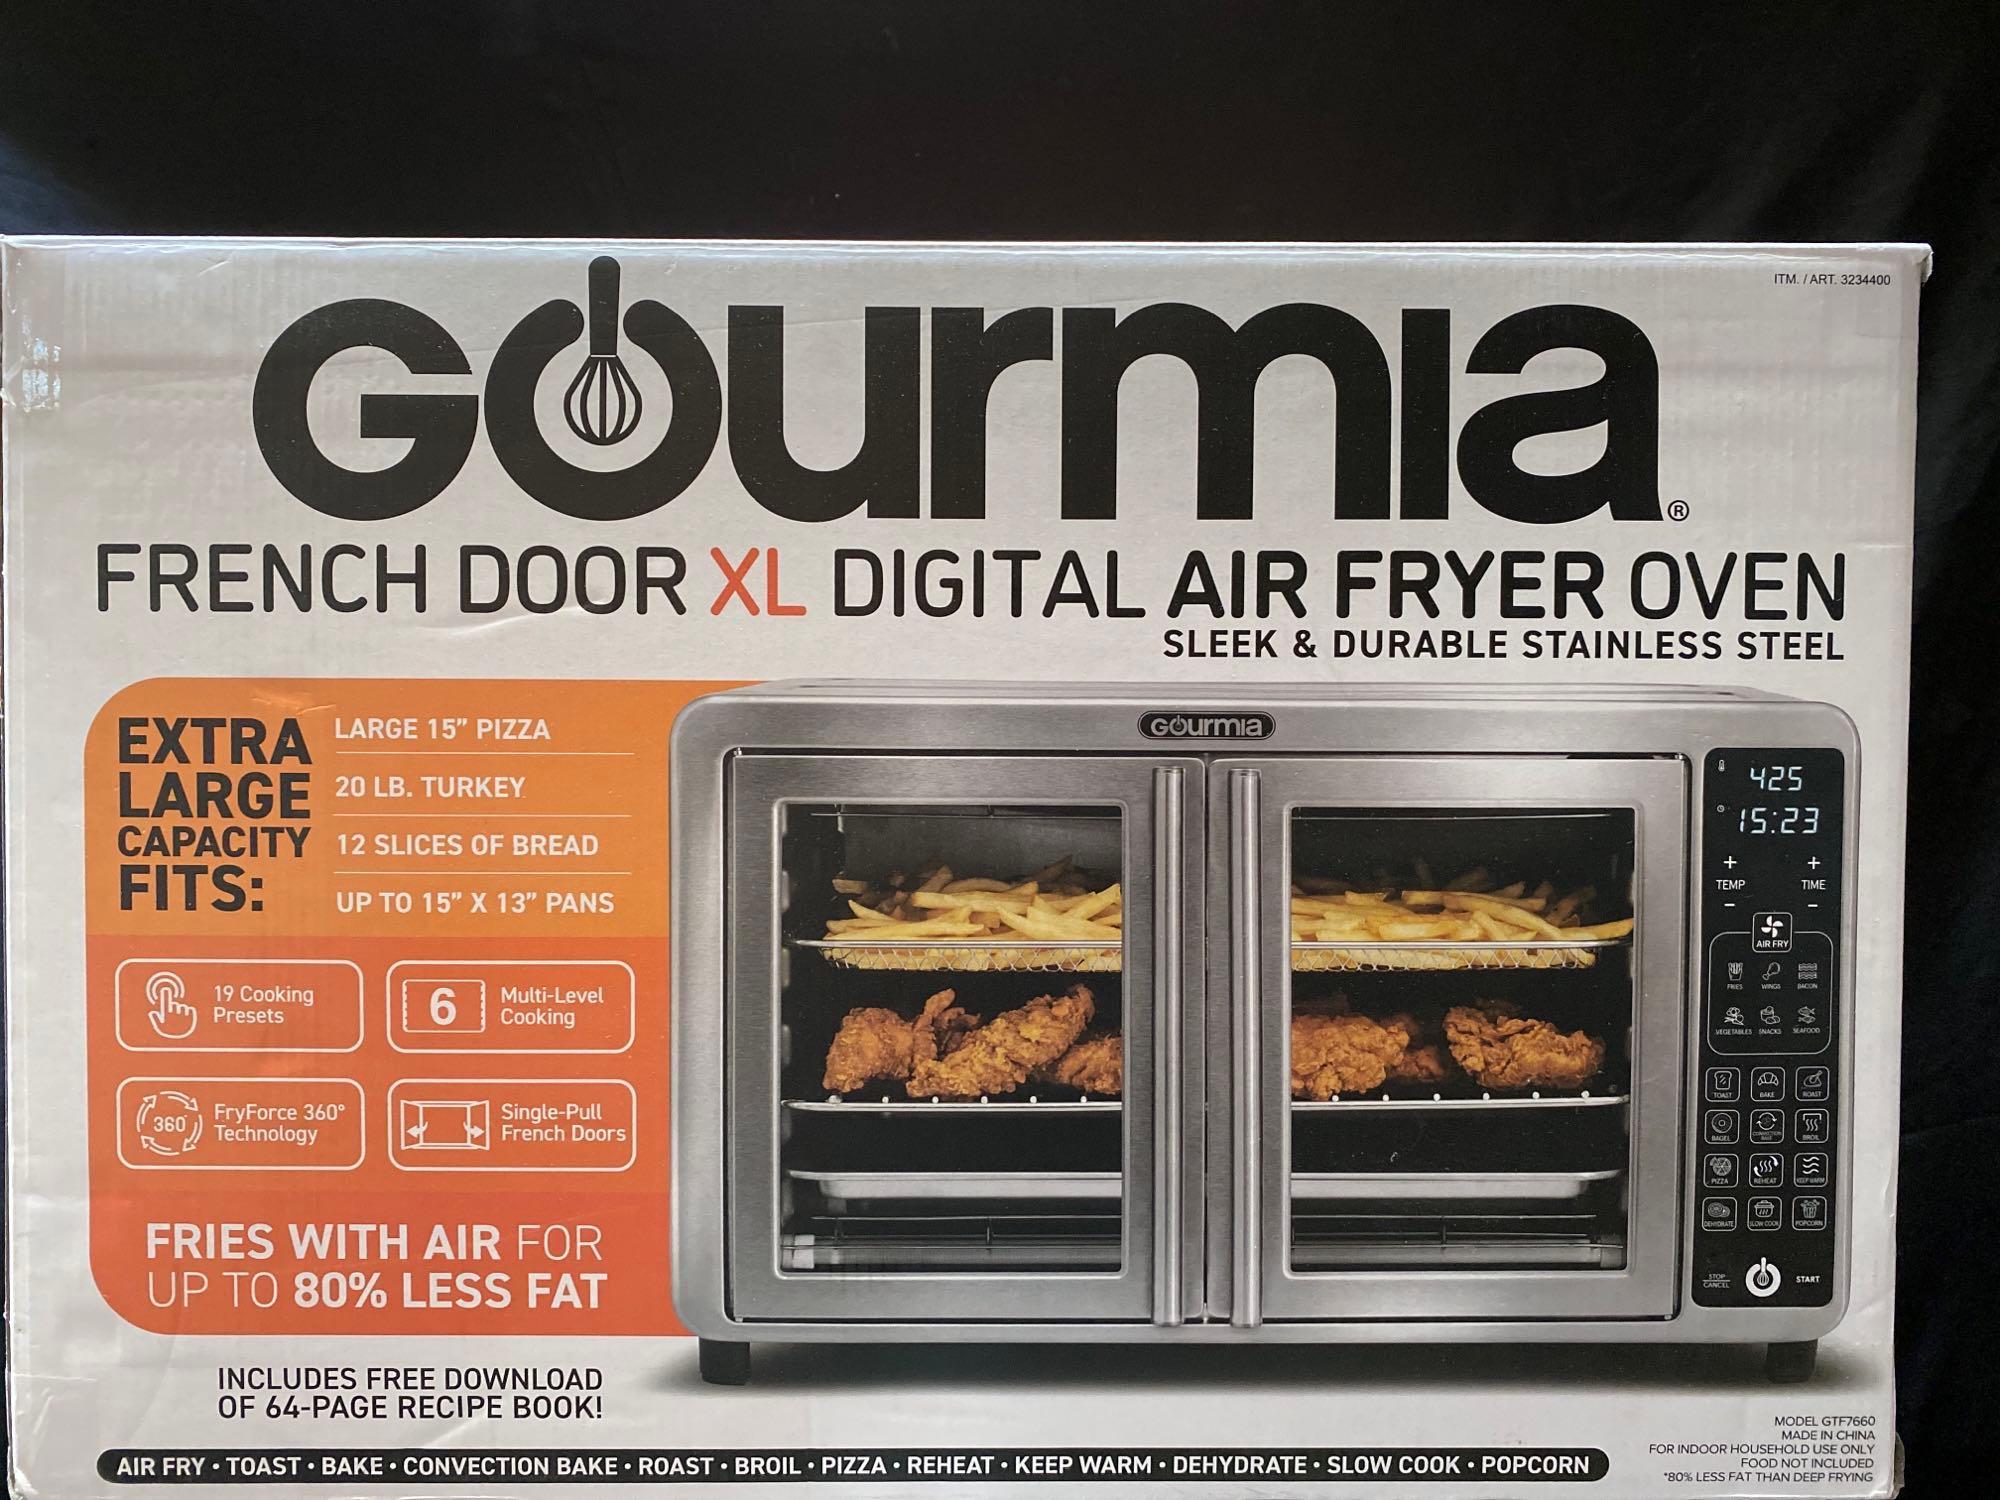 Gourmia French Door XL Digital Air Fryer Oven Review 